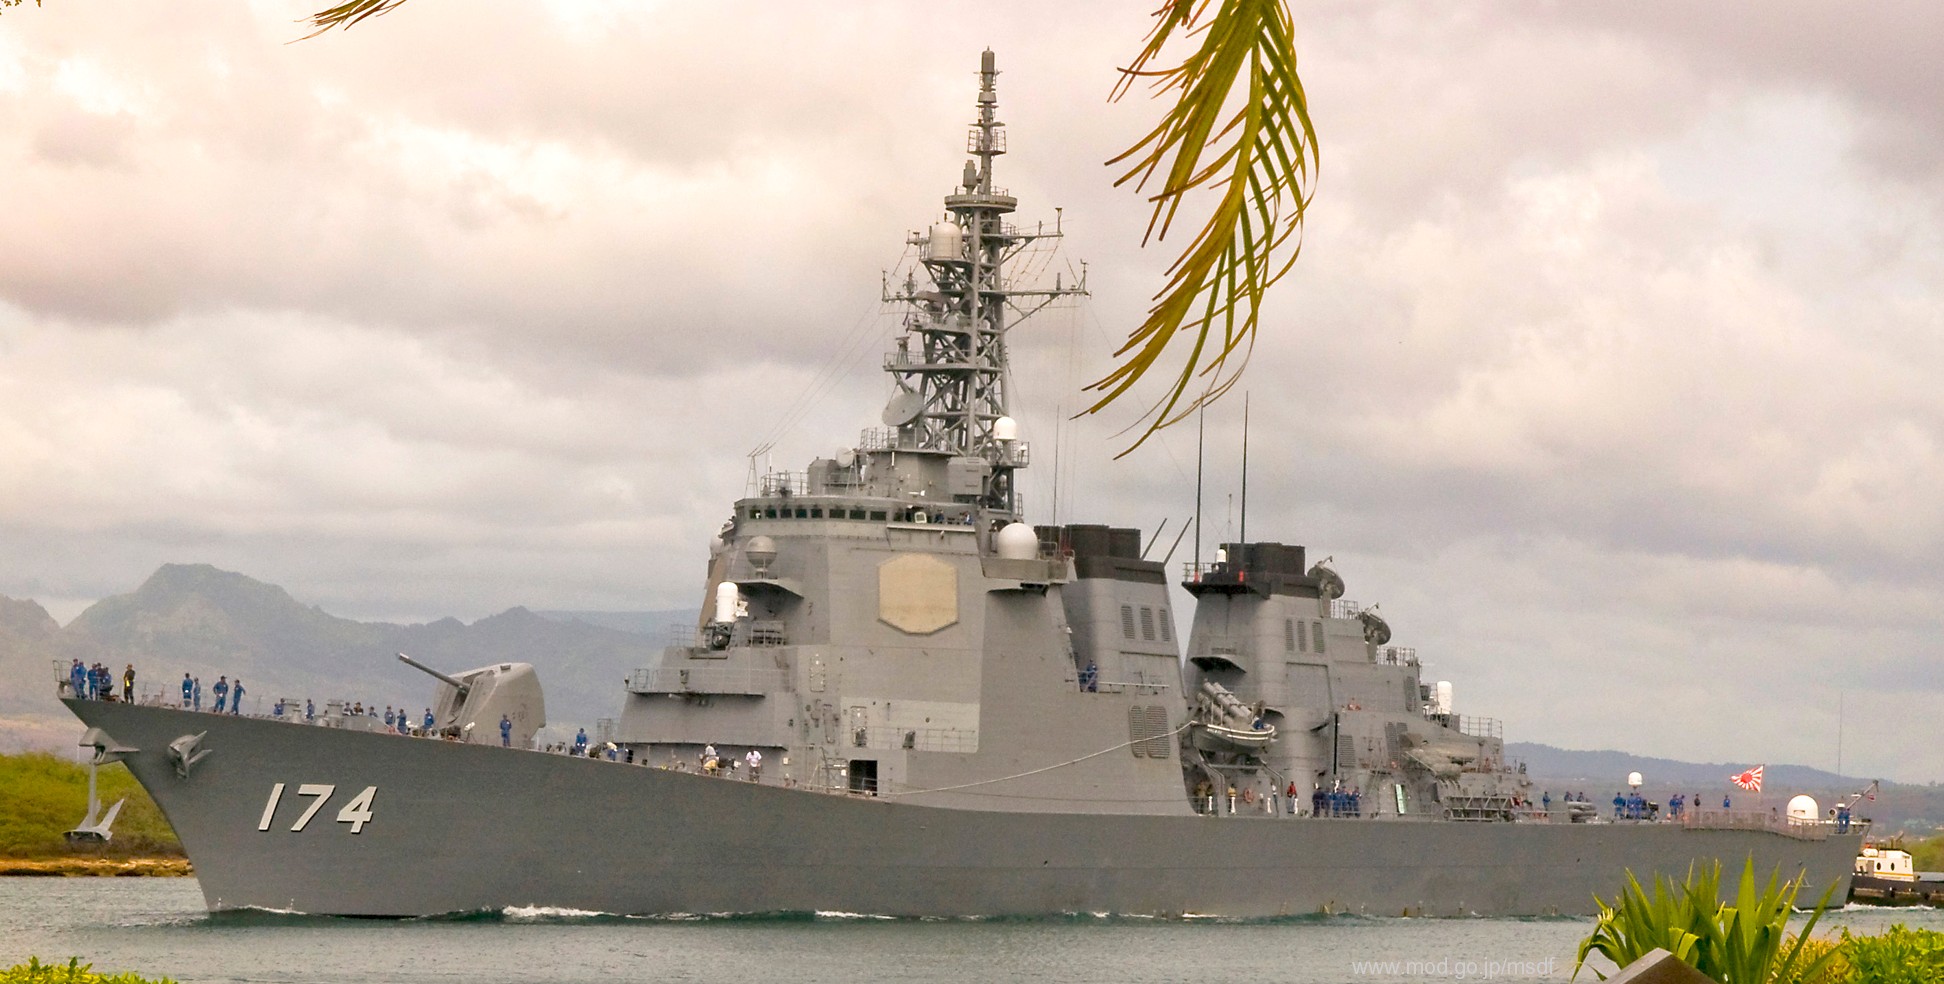 ddg-174 jds kirishima kongou class destroyer japan maritime self defense force jmsdf 09